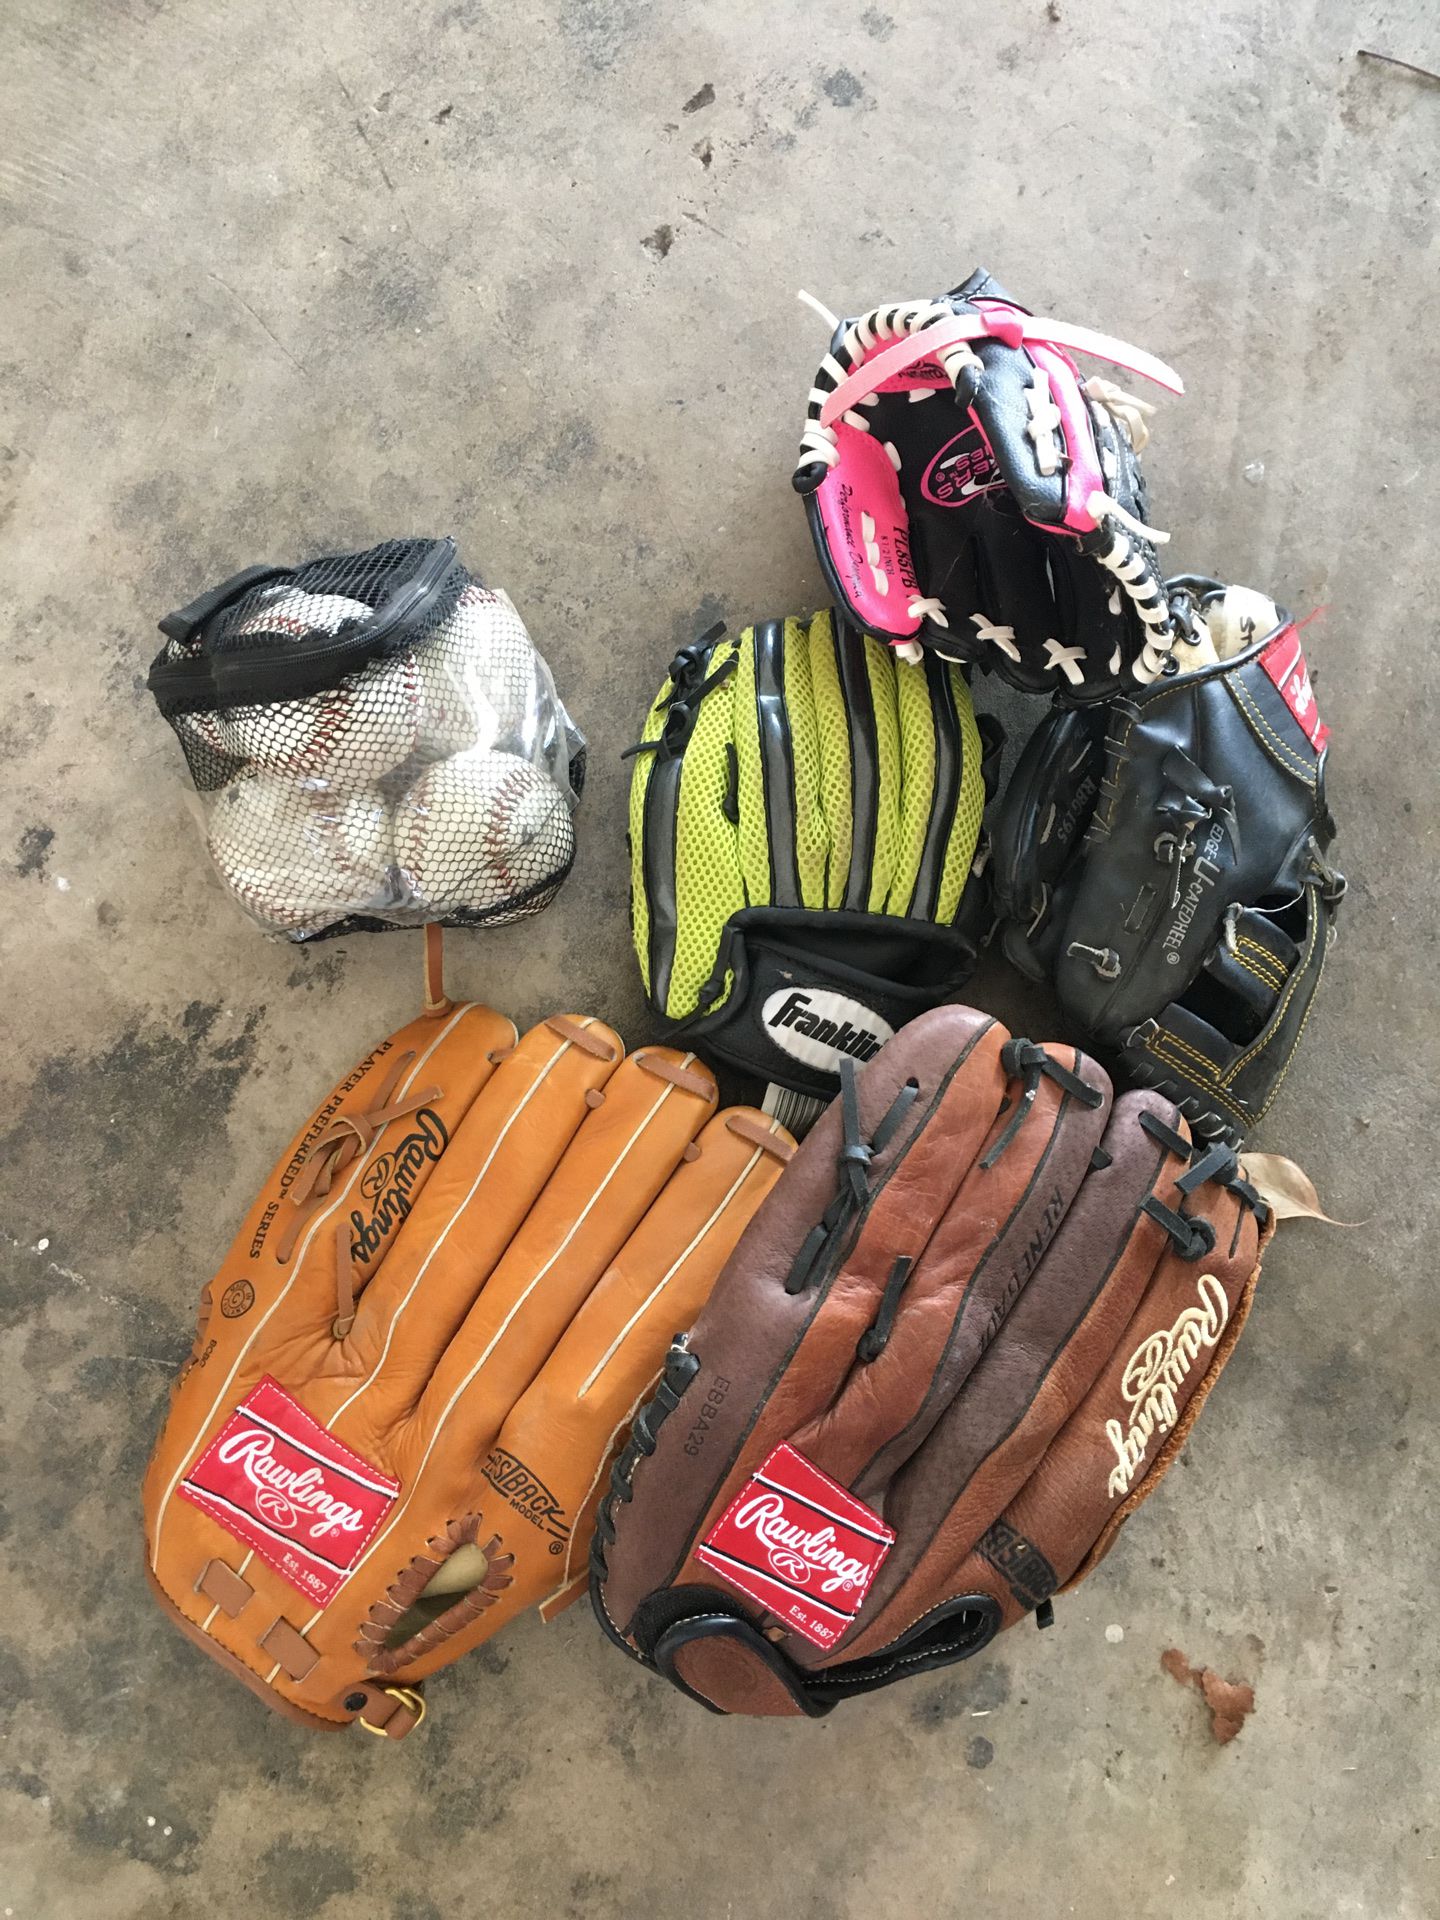 Baseballs/ mitts